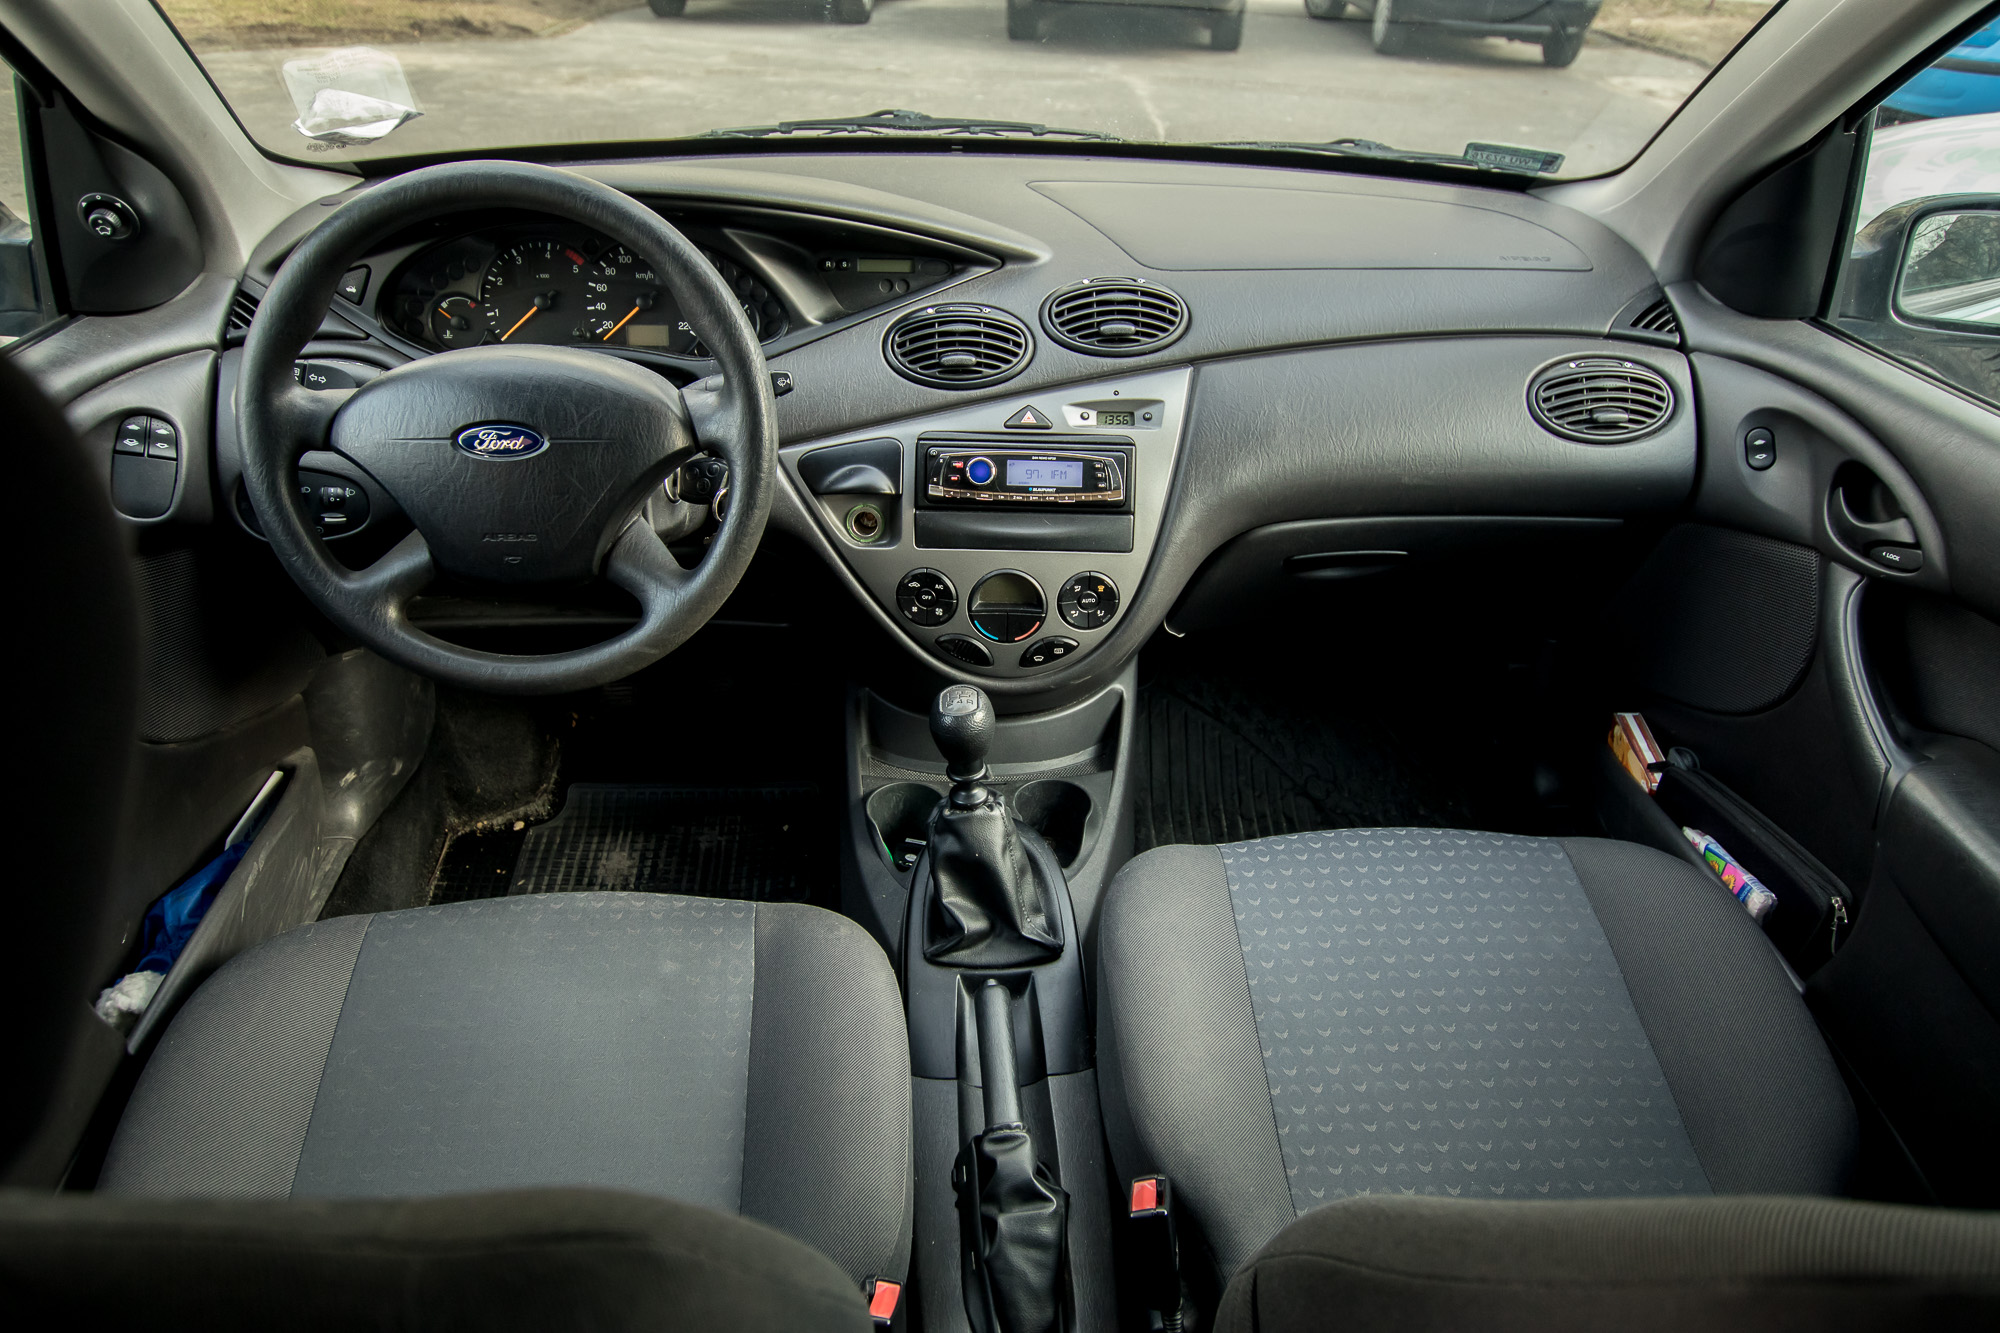 Ford Focus IV 2019 test